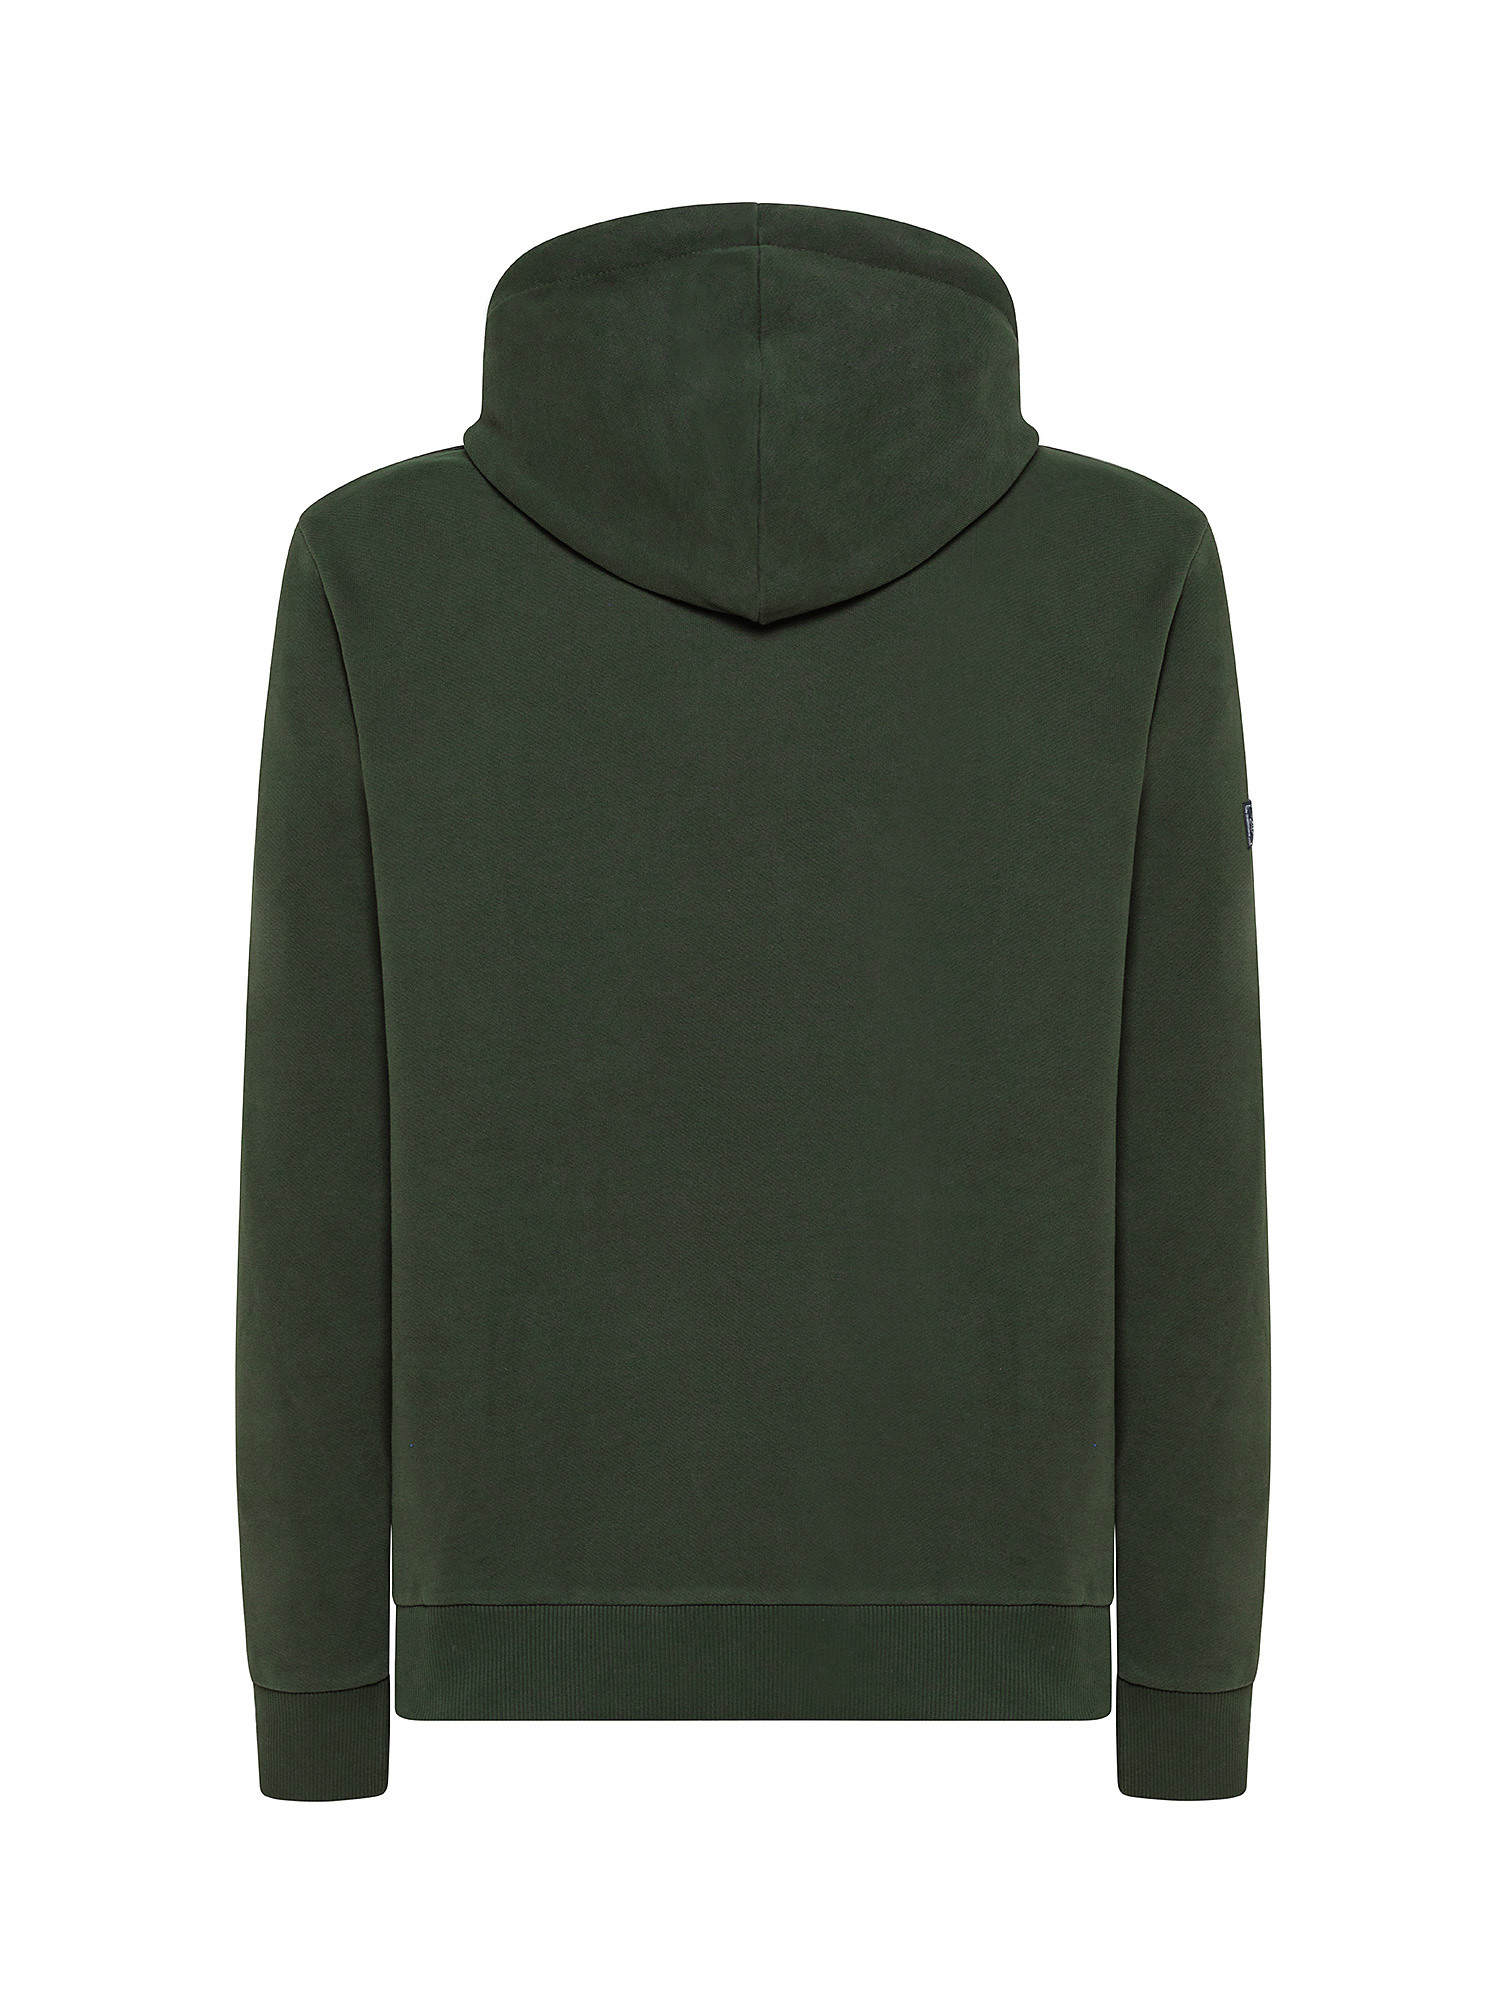 Hooded sweatshirt with print, Dark Green, large image number 1